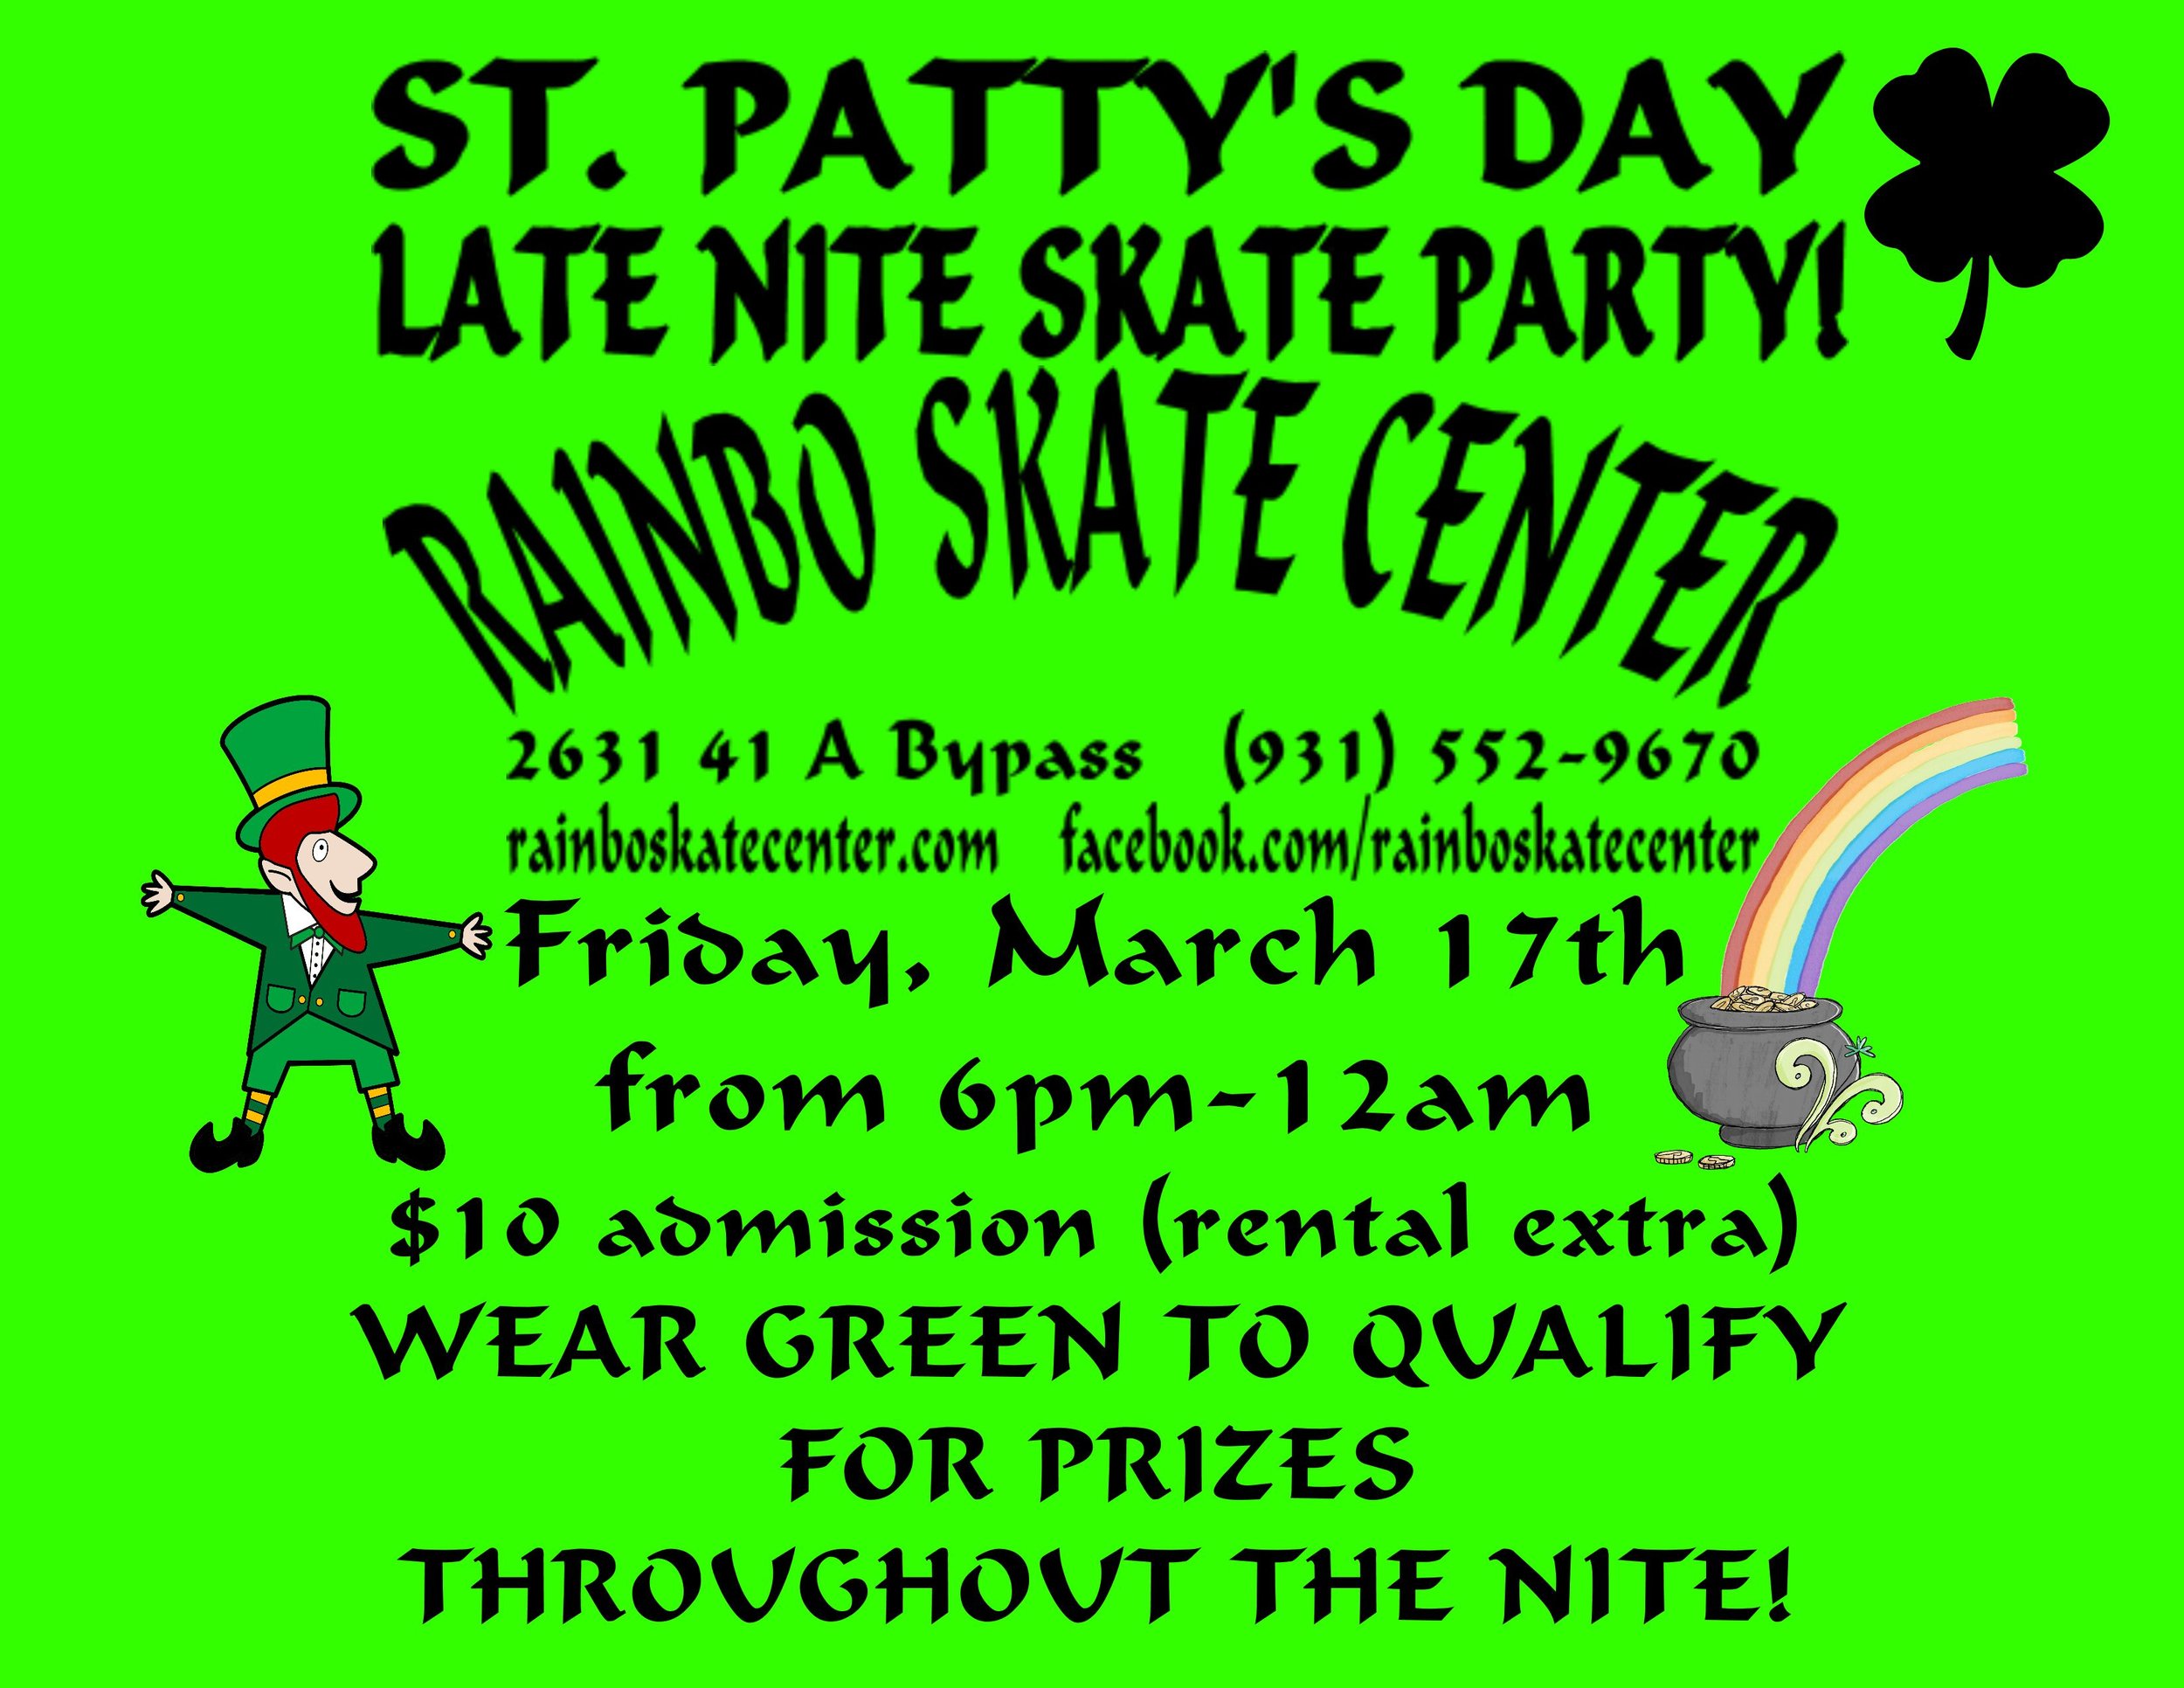 ST. PATRICK'S LATE NITE SKATE PARTY!! - RAINBO SKATE CENTER